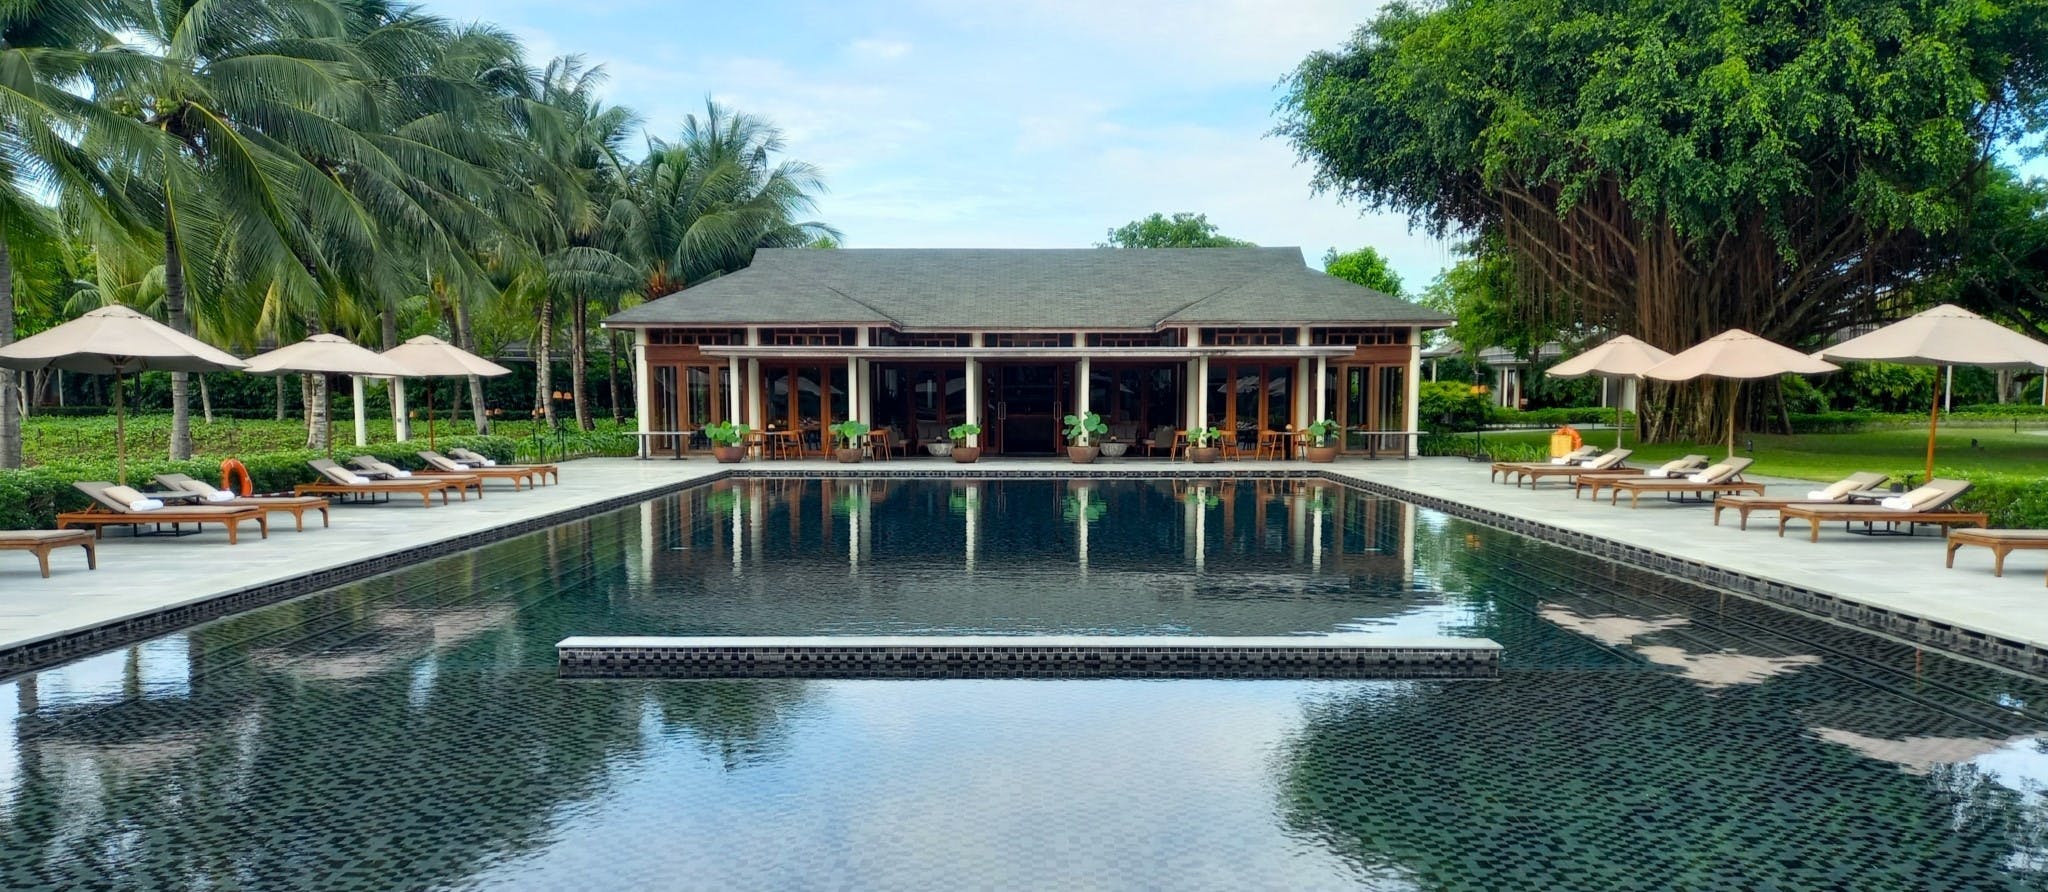 Azerai Resort, Can Tho City, Mekong Delta, Vietnam